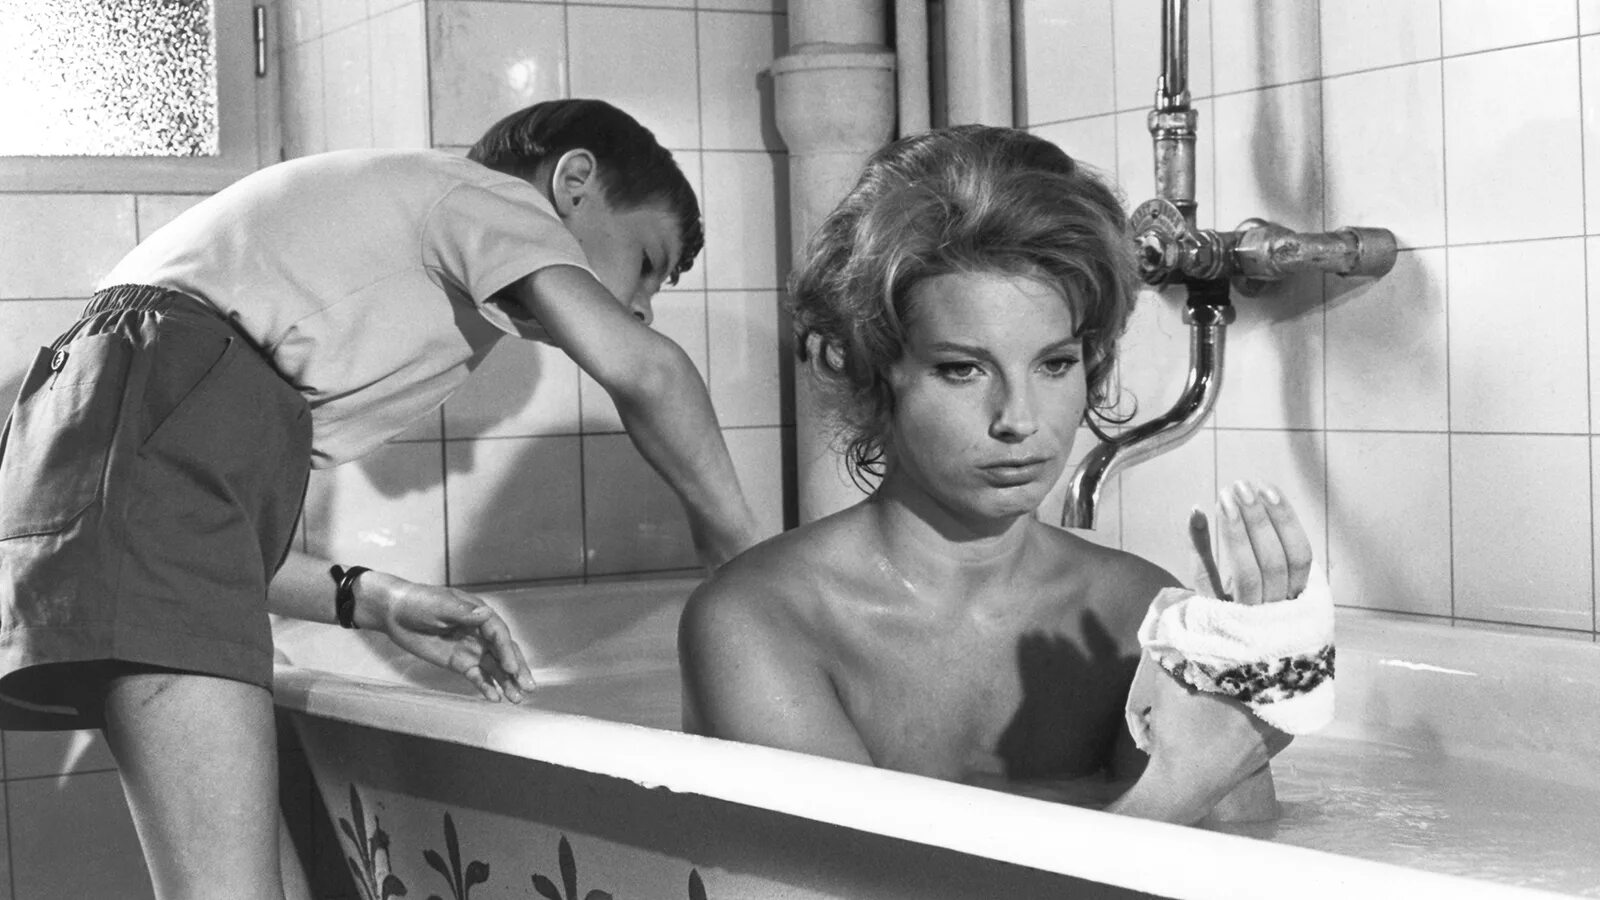 Watch your wife. Молчание _ tystnaden (1963). Молчание Ингмар Бергман. “Молчание” – Ингмар Бергман, 1963 nude. Гуннель Линдблум молчание.